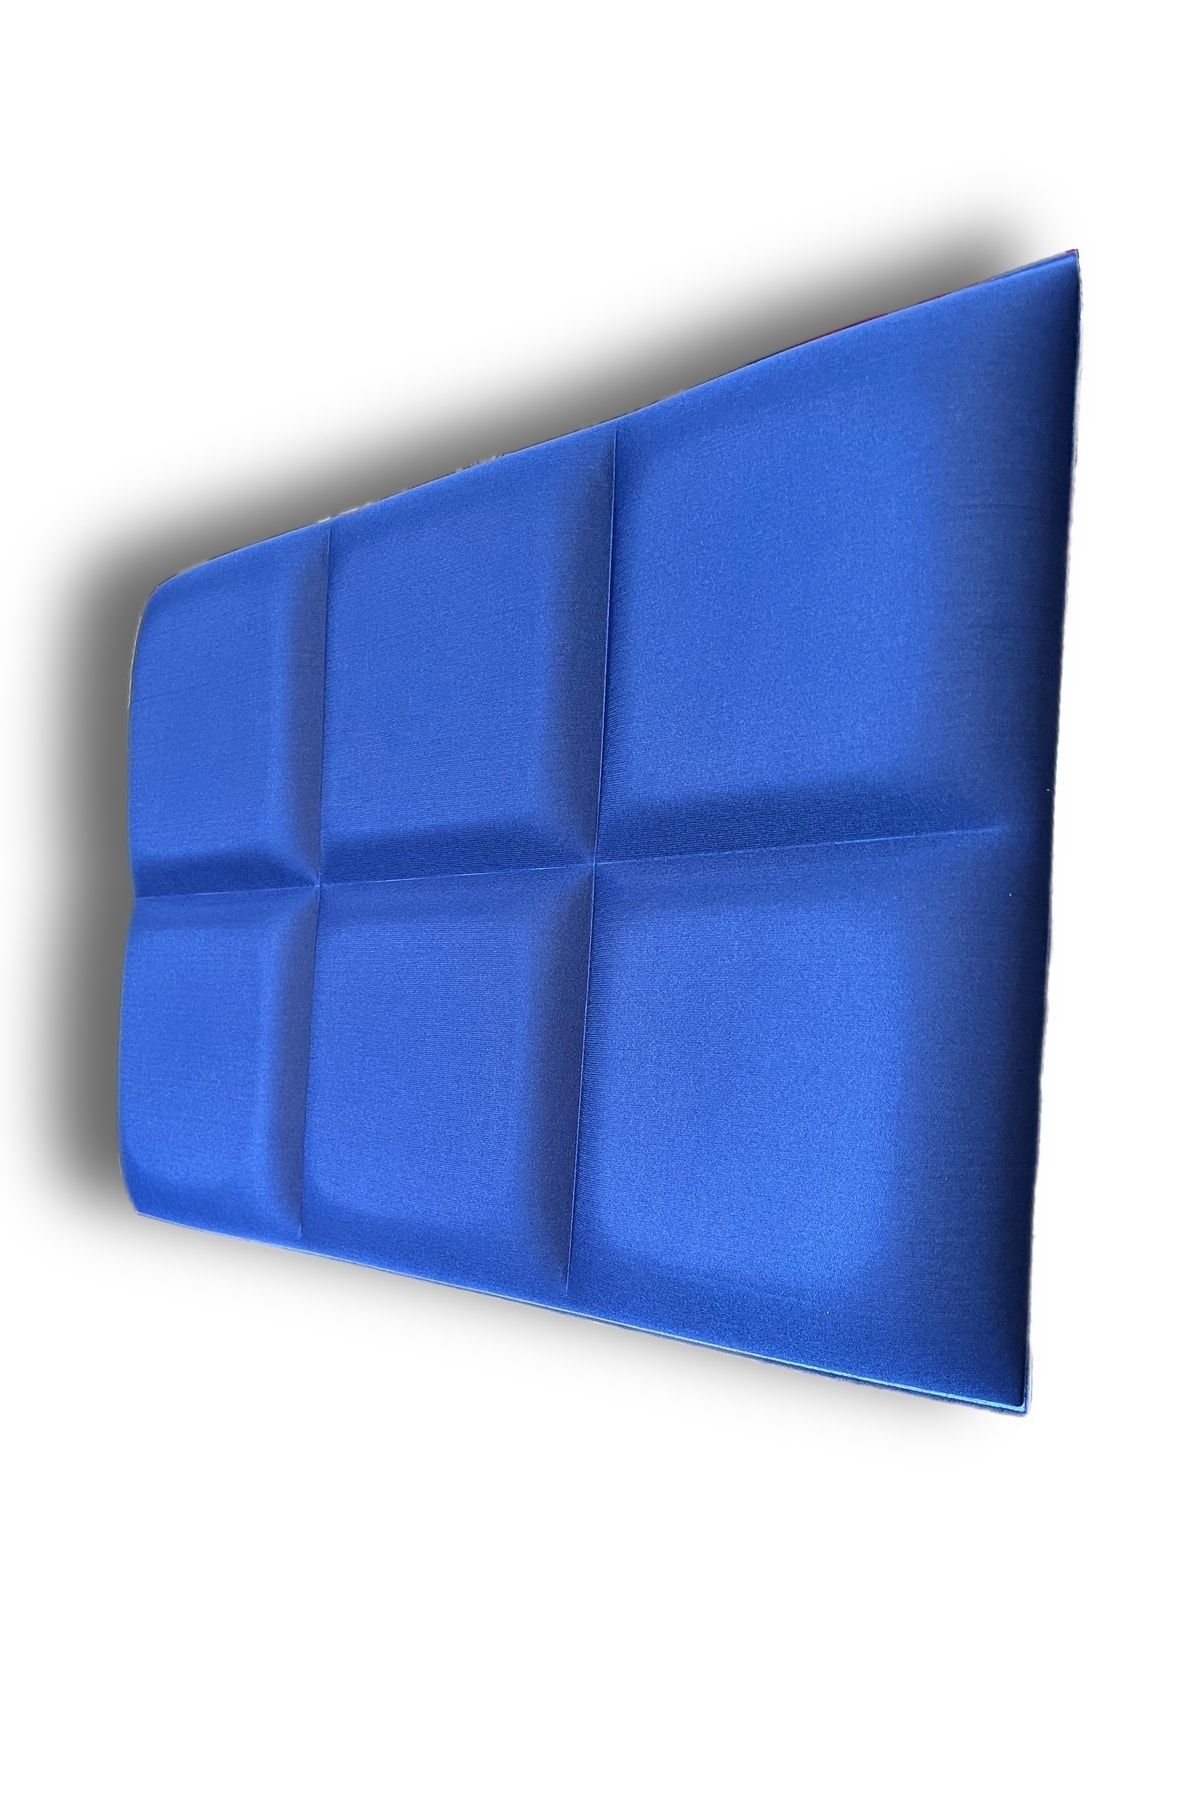 Ankases Ses Yalıtım Akustik 3d Dolgulu Parlak Yüzeyli Mavi Panel 50x33cm Kalınlık 30mm